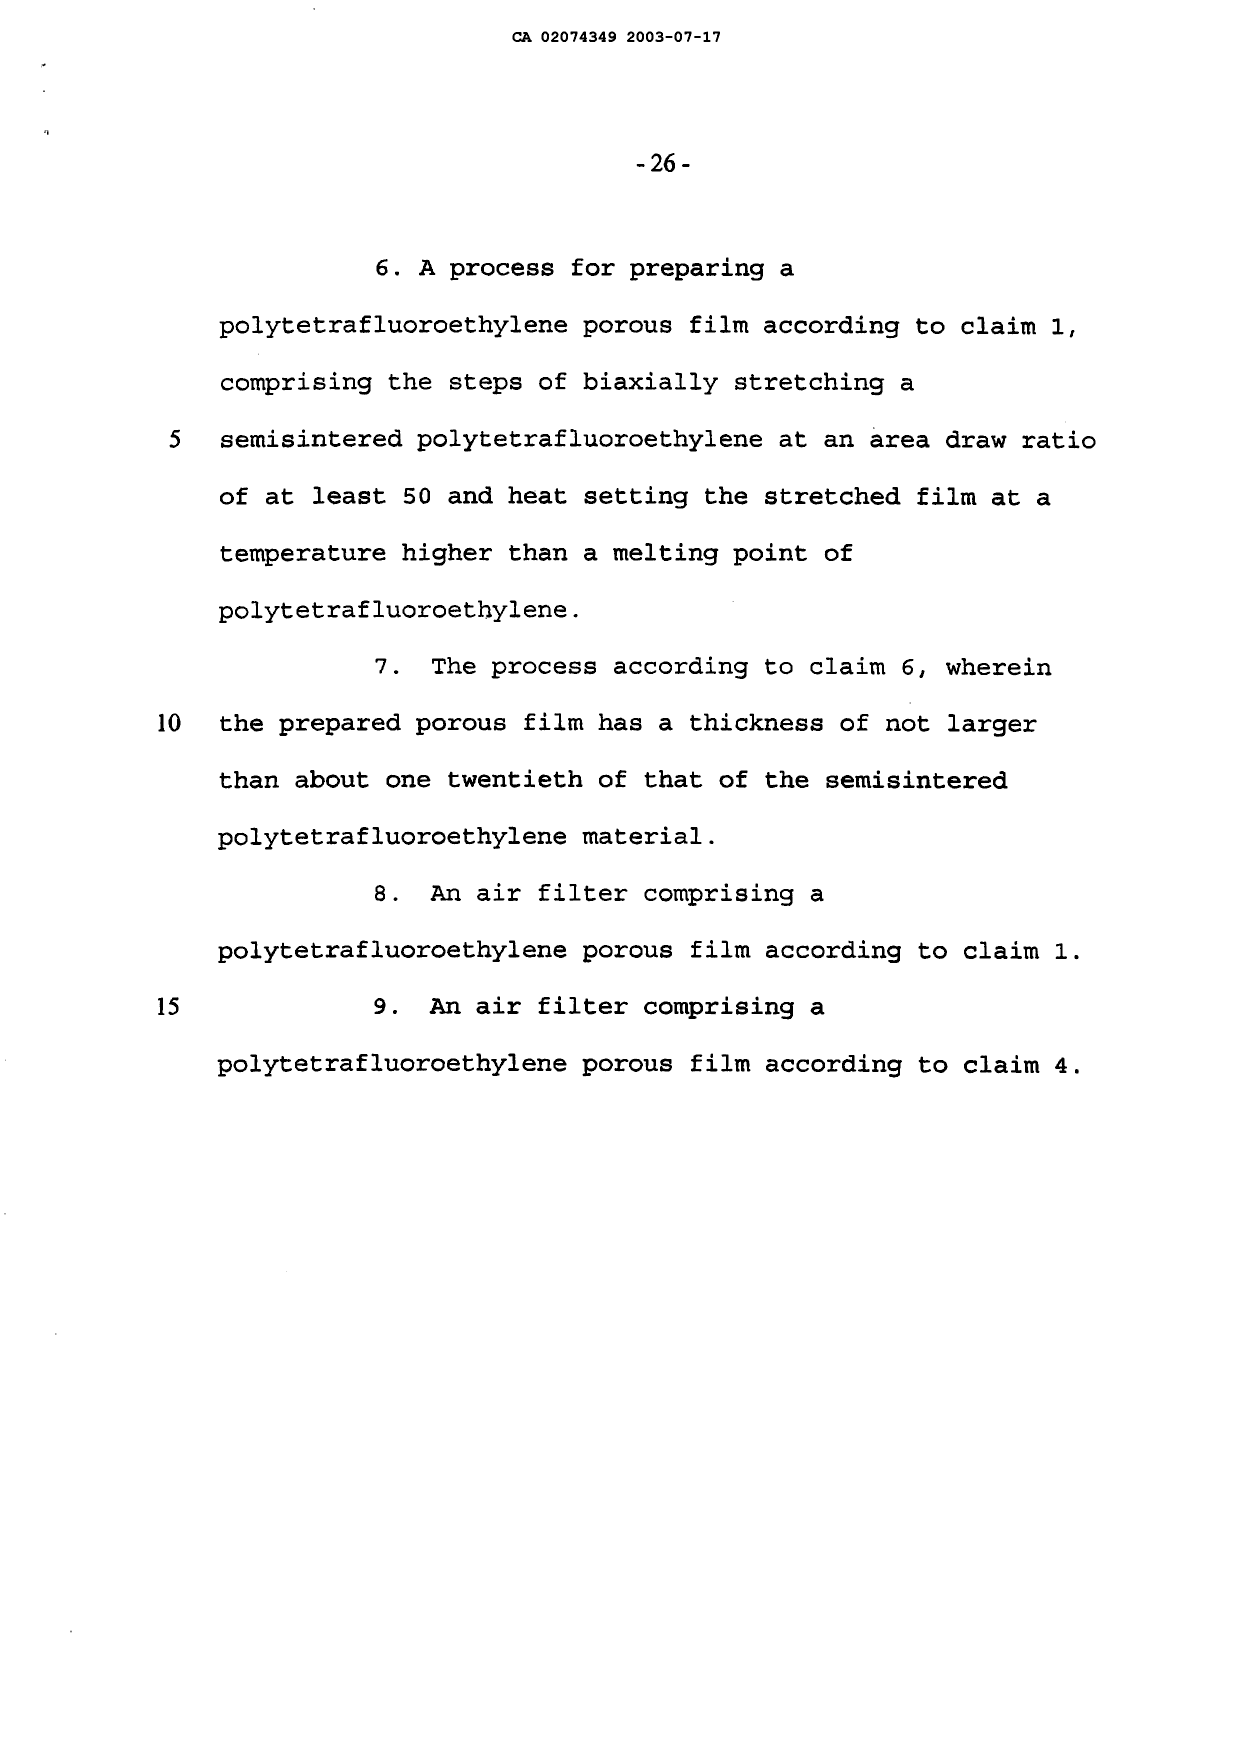 Canadian Patent Document 2074349. Prosecution-Amendment 20030717. Image 4 of 4